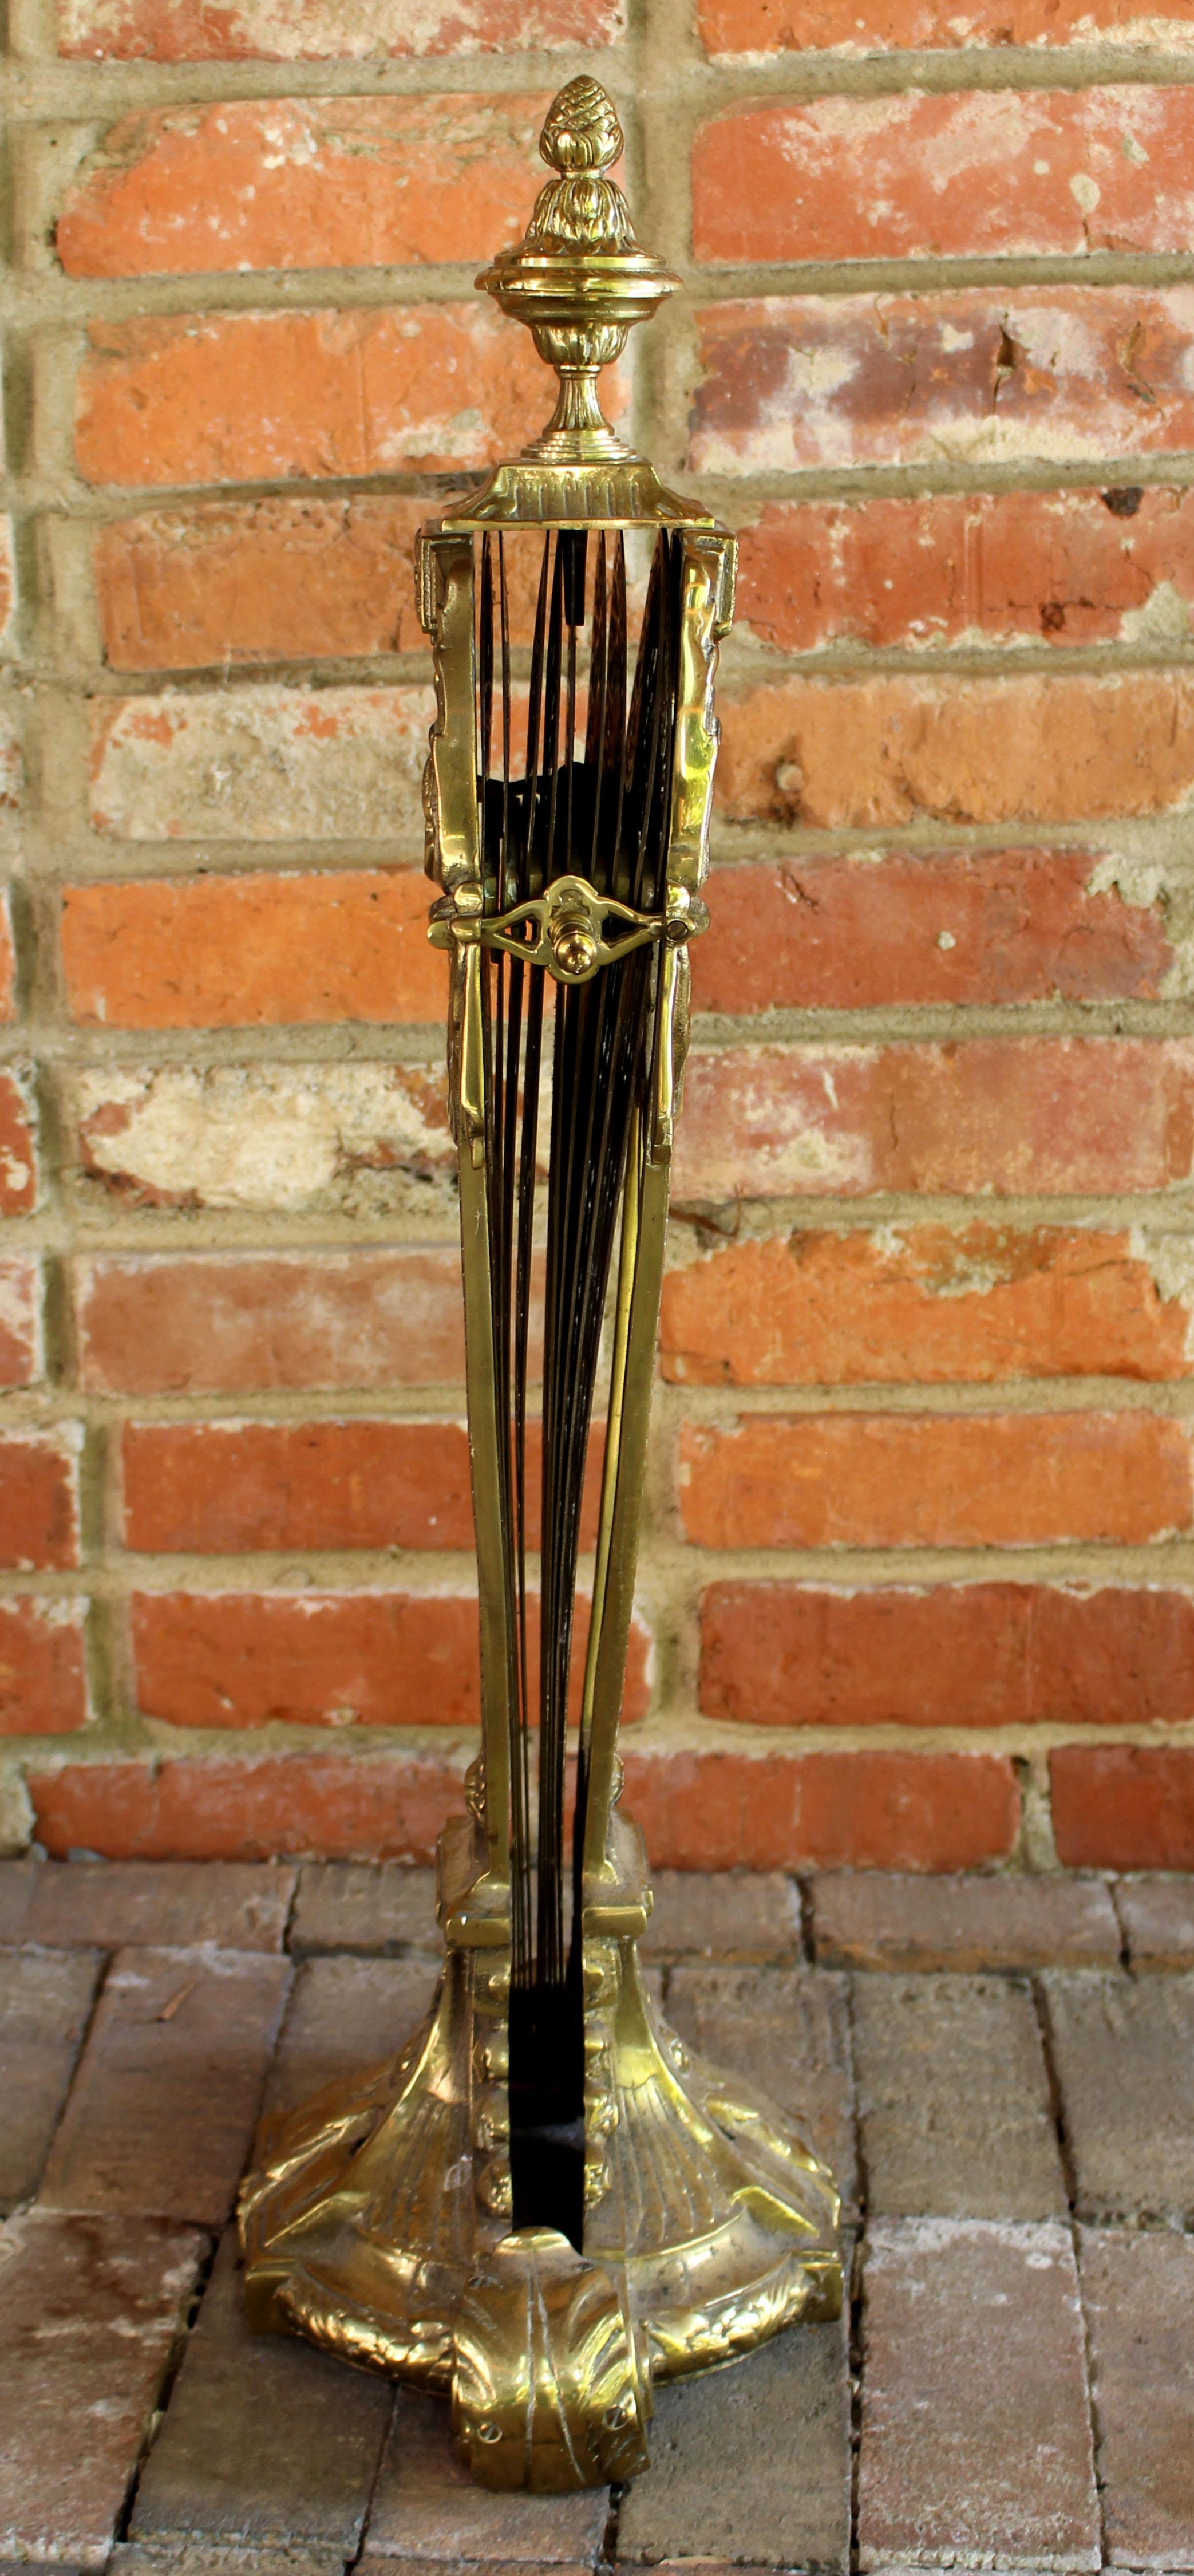 Circa 1920s English or European Brass Fireplace Fan 3